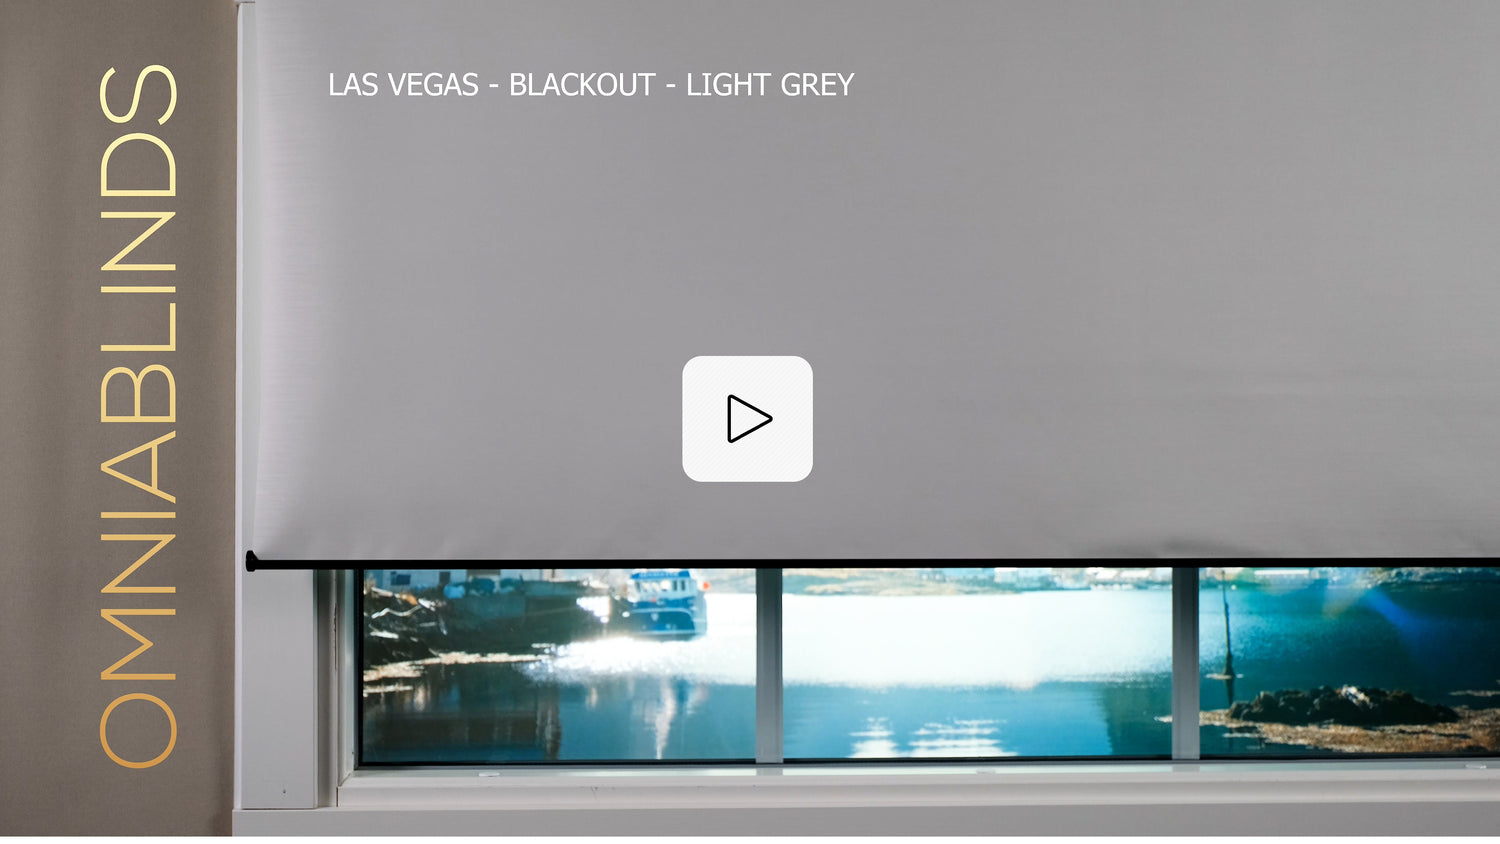 Las Vegas - Blackout - Light Grey